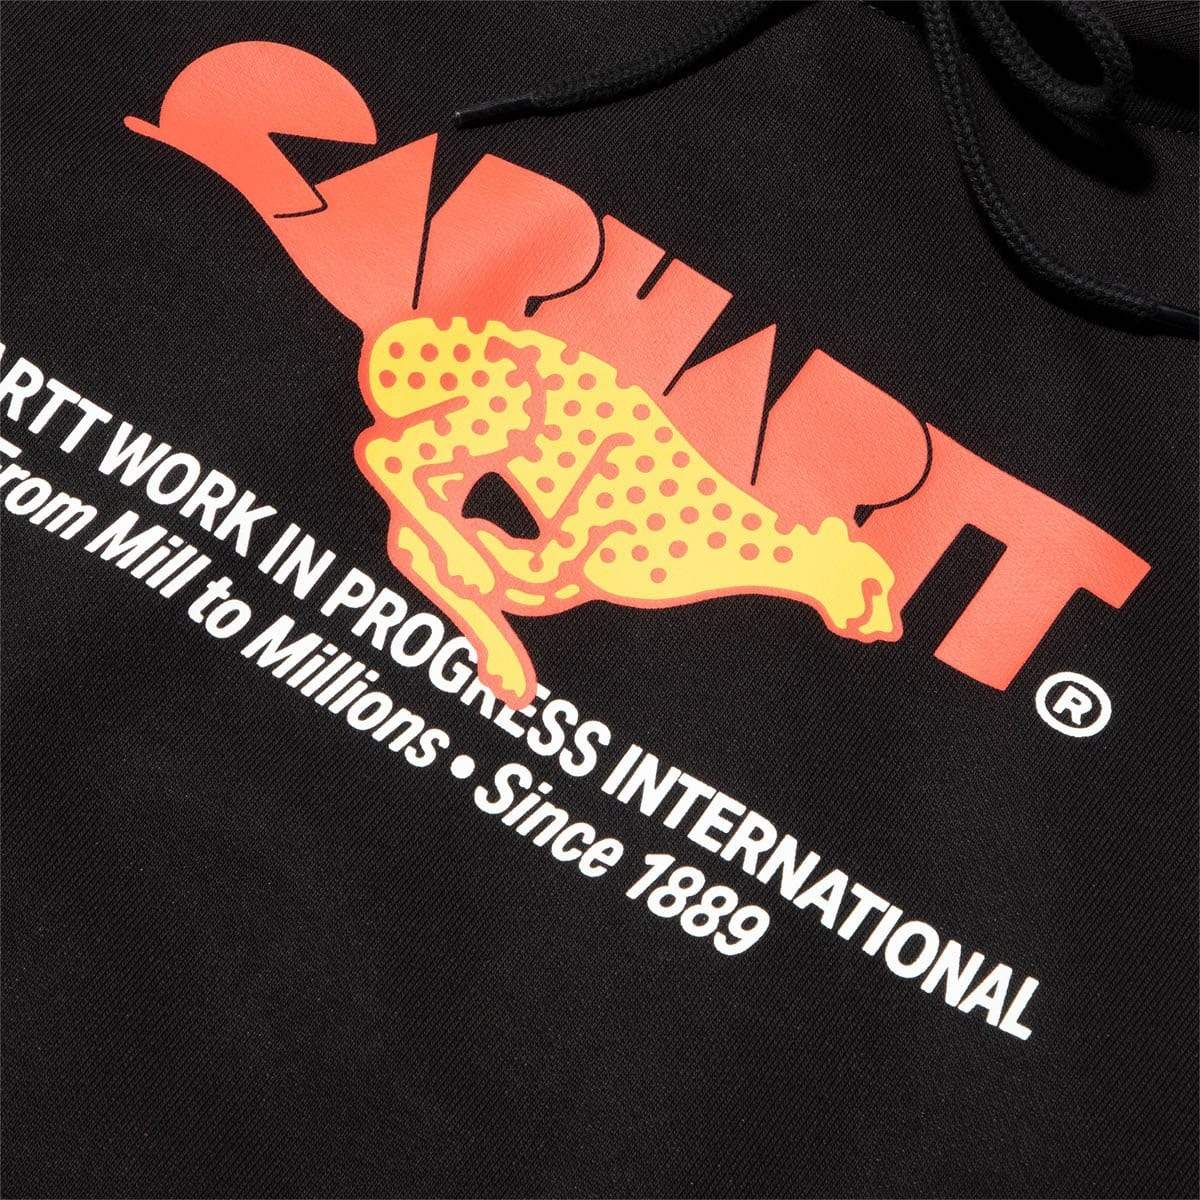 Carhartt W.I.P. Hoodies & Sweatshirts HOODED RUNNER SWEAT